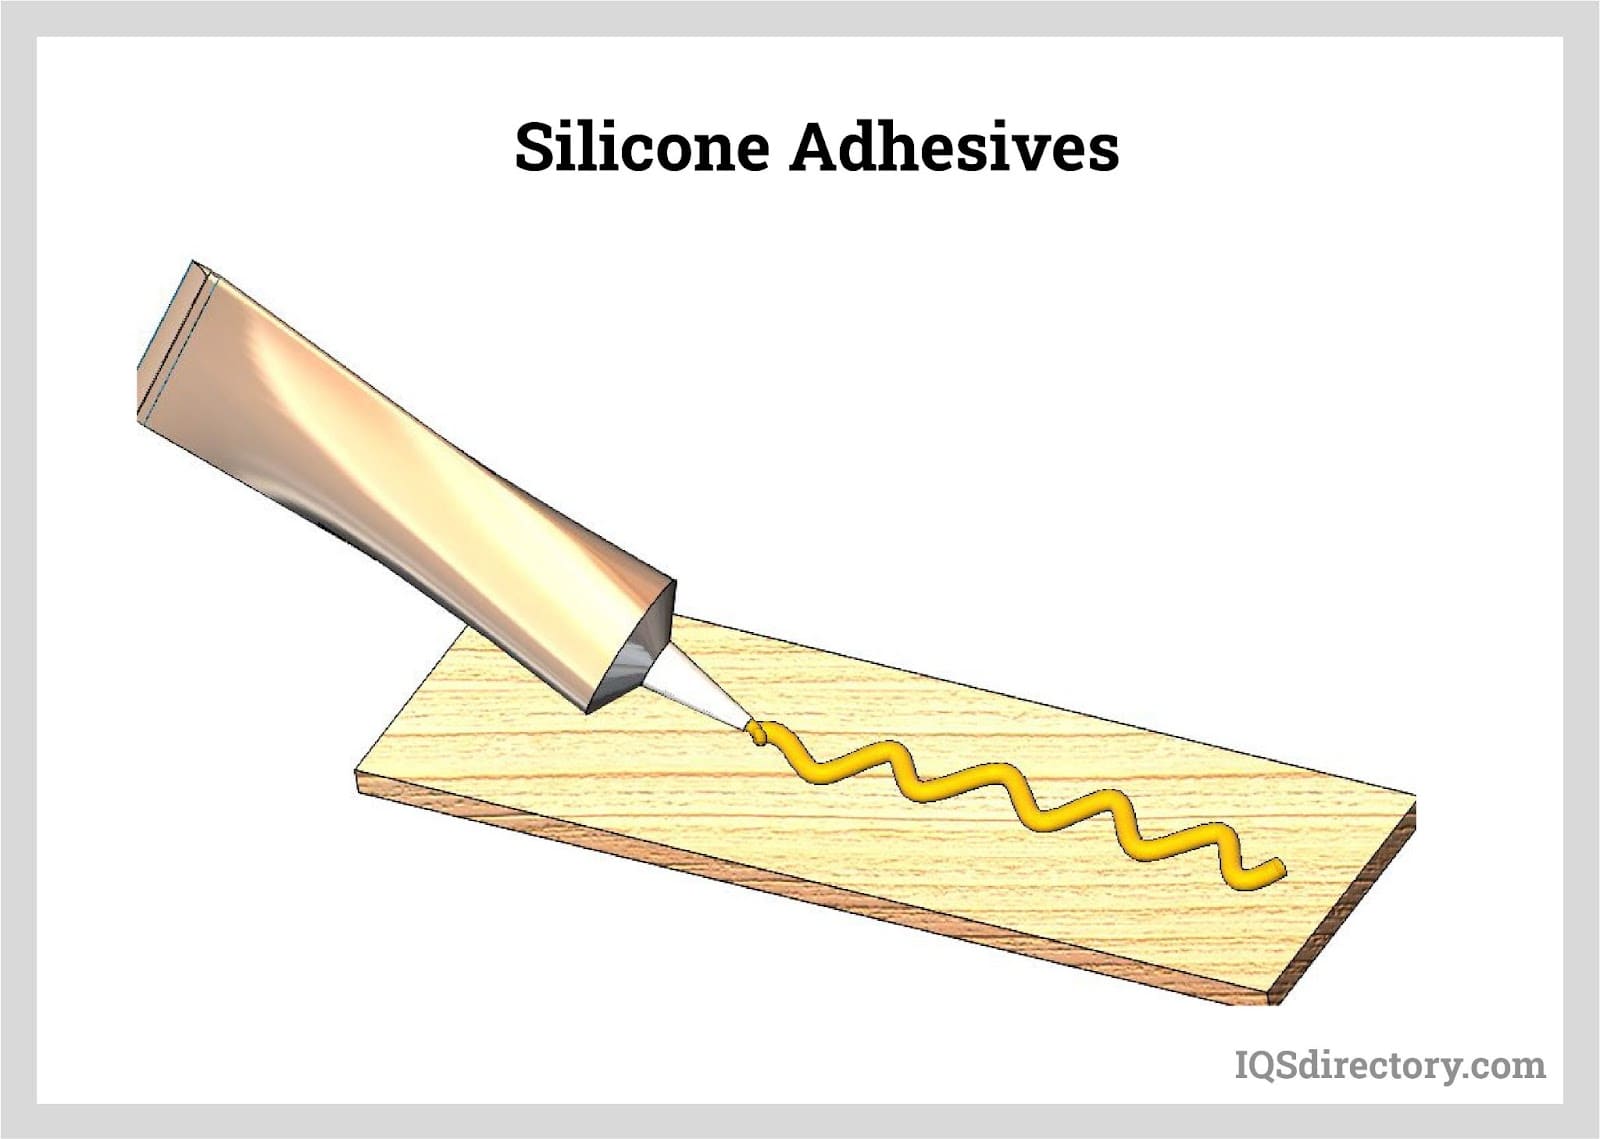 Silicone Adhesives